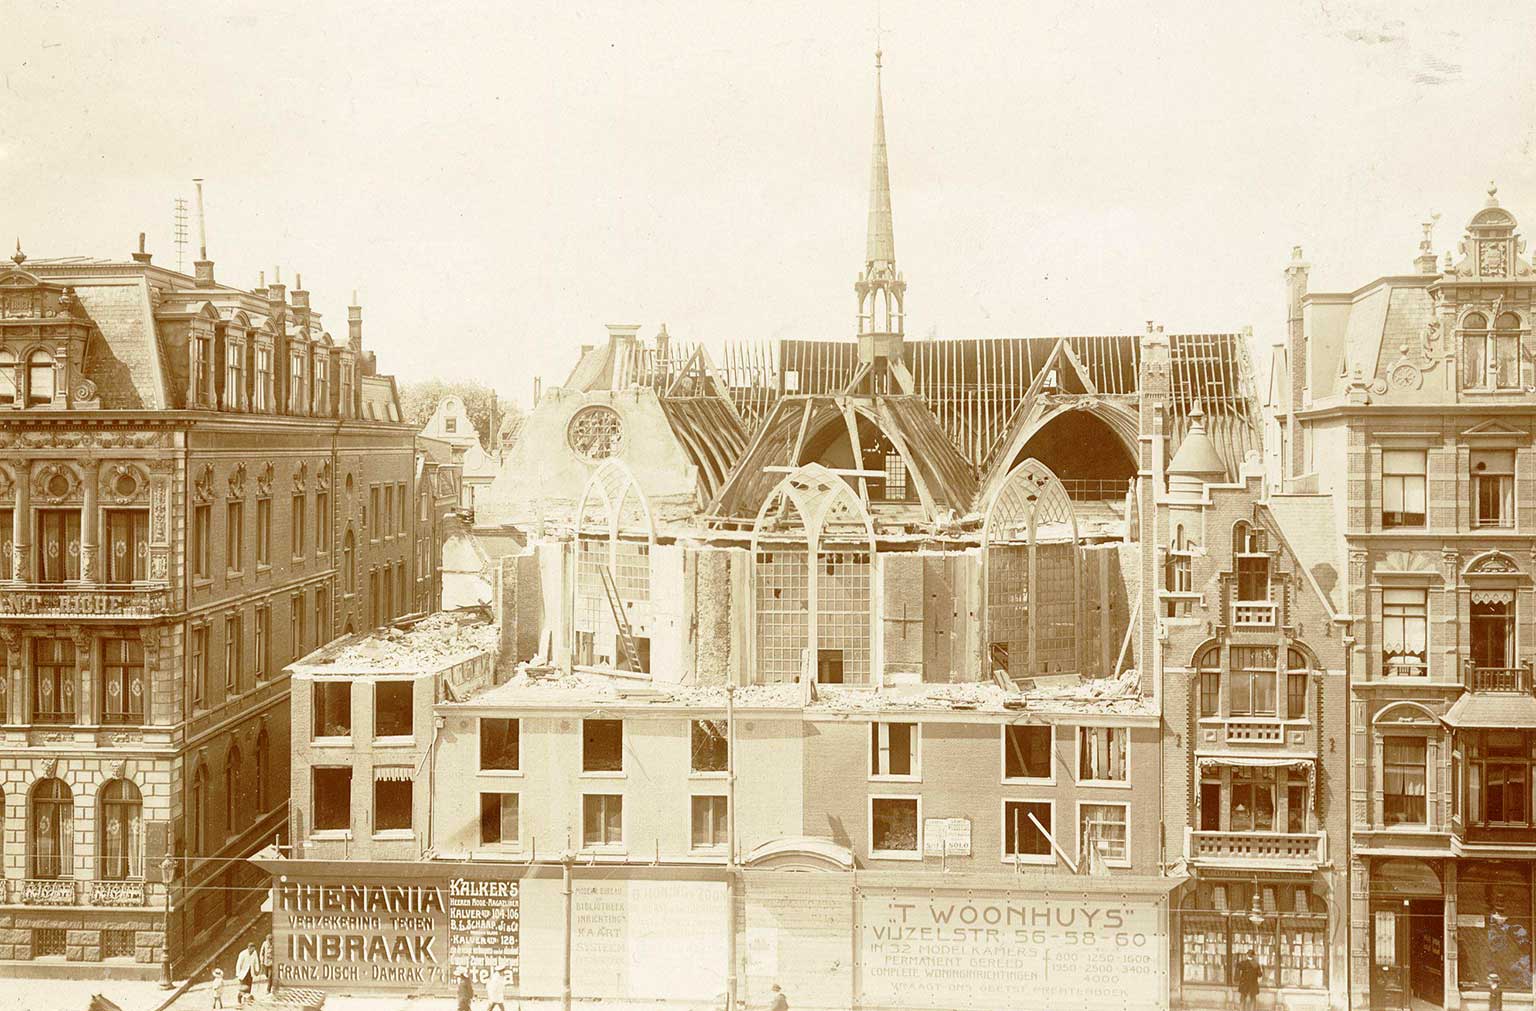 Nieuwezijds Kapel, Amsterdam, seen from Rokin side during demolition in 1908 